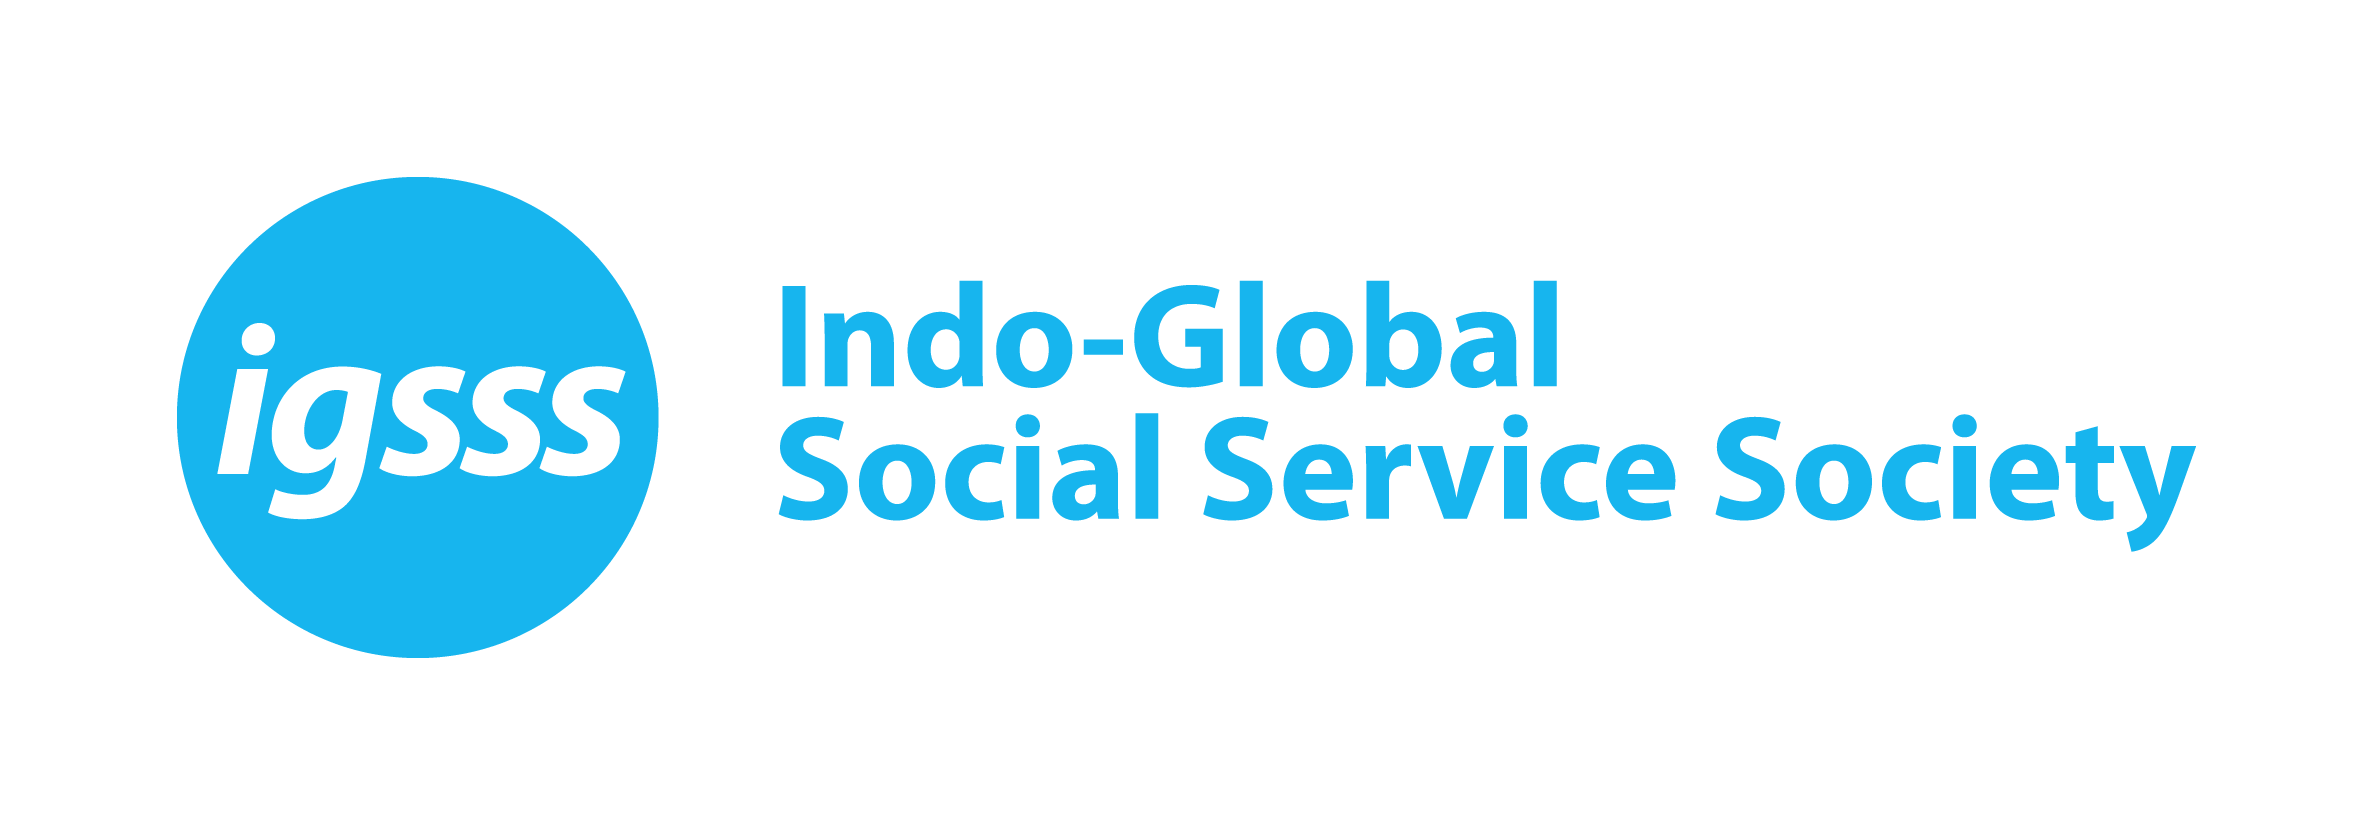 Indo-Global Social Service Society logo